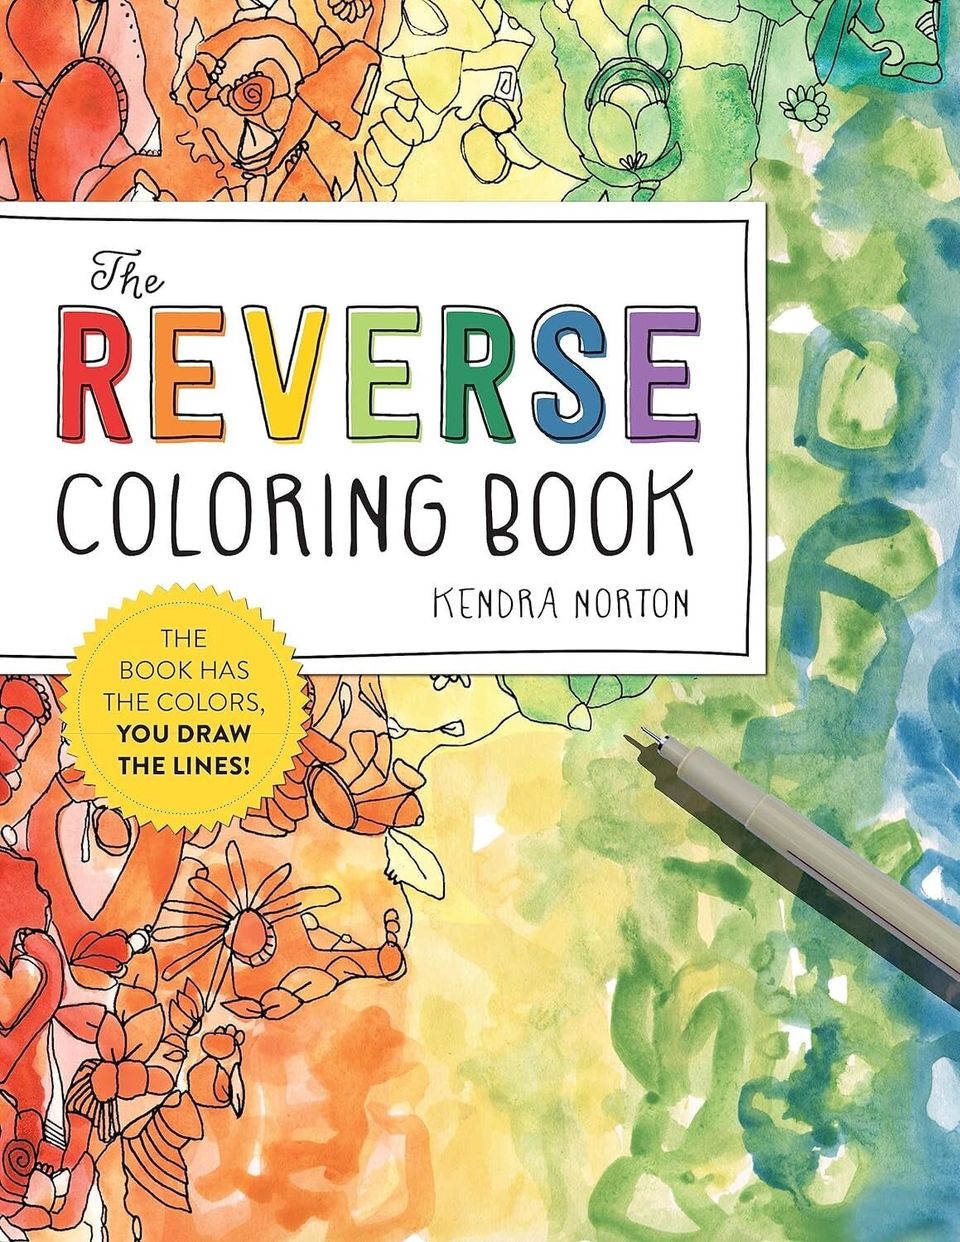 The cult-favorite Reverse Coloring Book